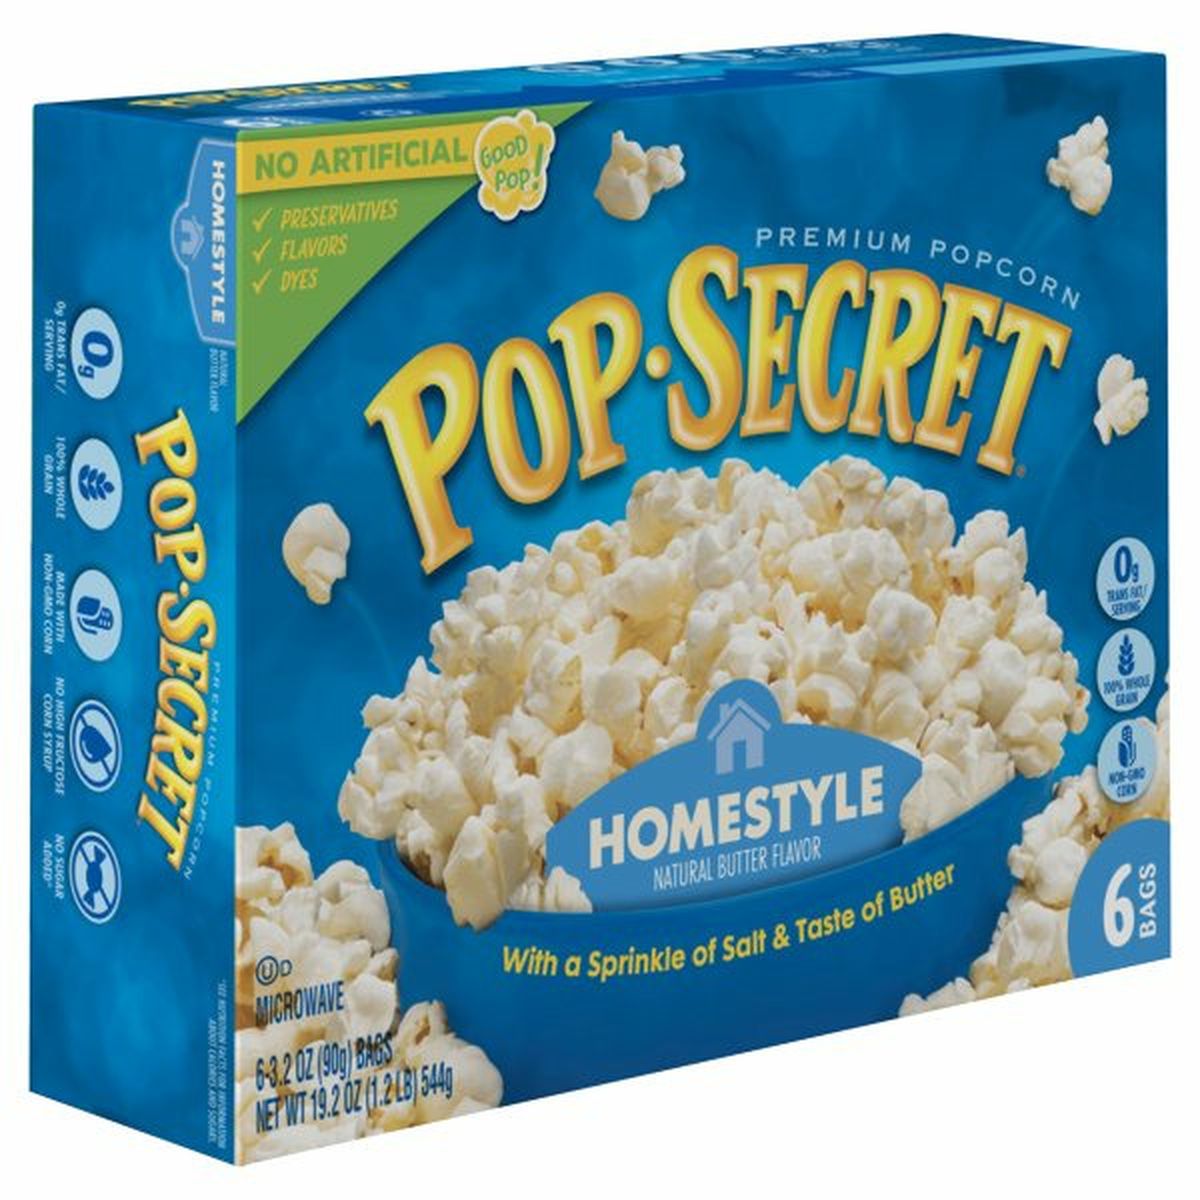 Calories in Pop Secret Popcorn, Premium, Homestyle, Natural Butter Flavor